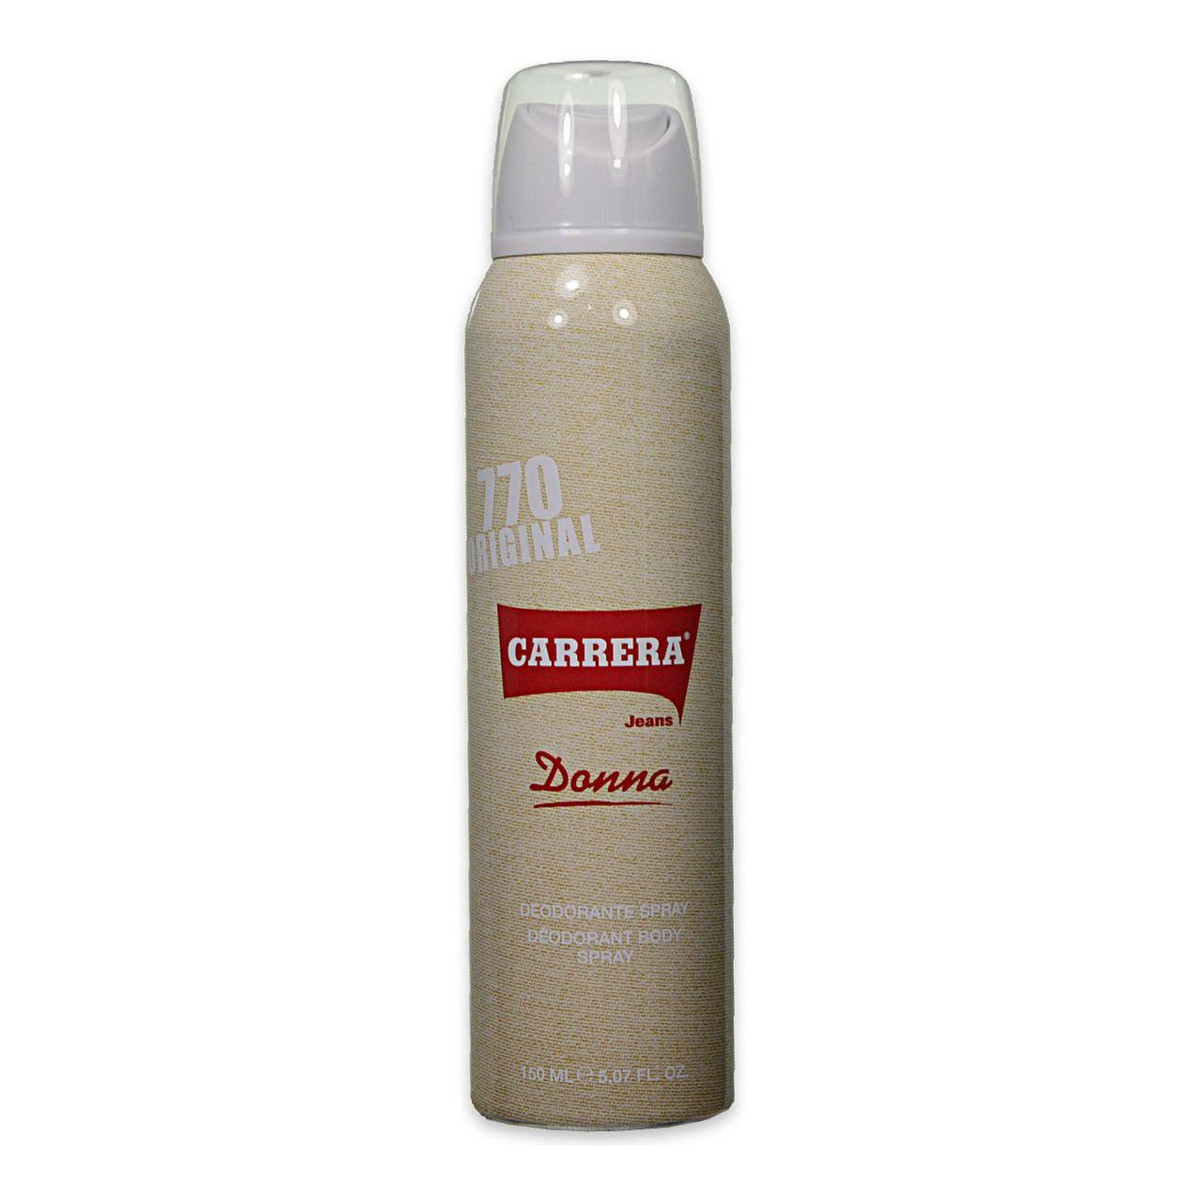 Carrera 700 Original dezodorant 150ml